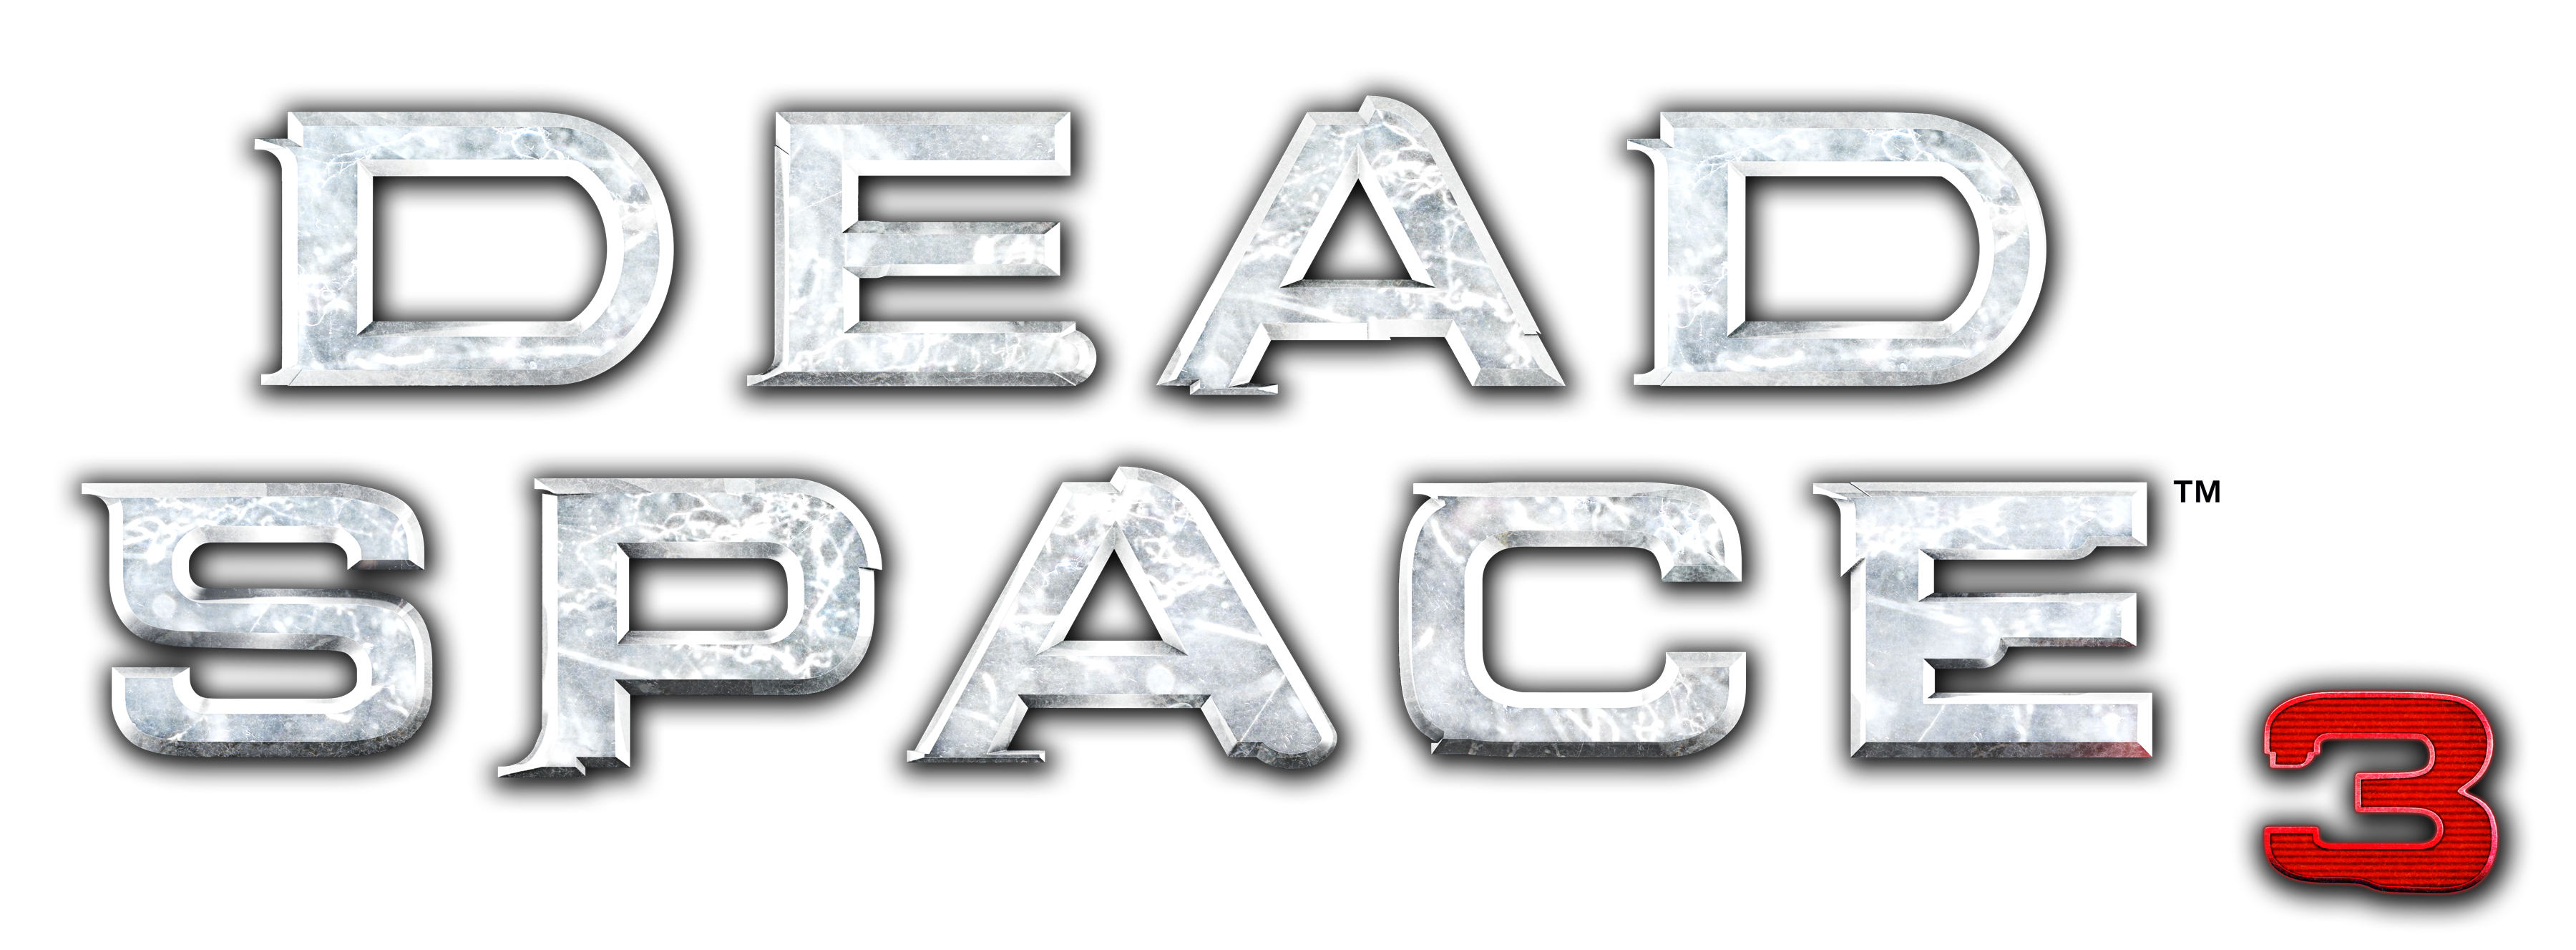 download dead space 3 remake